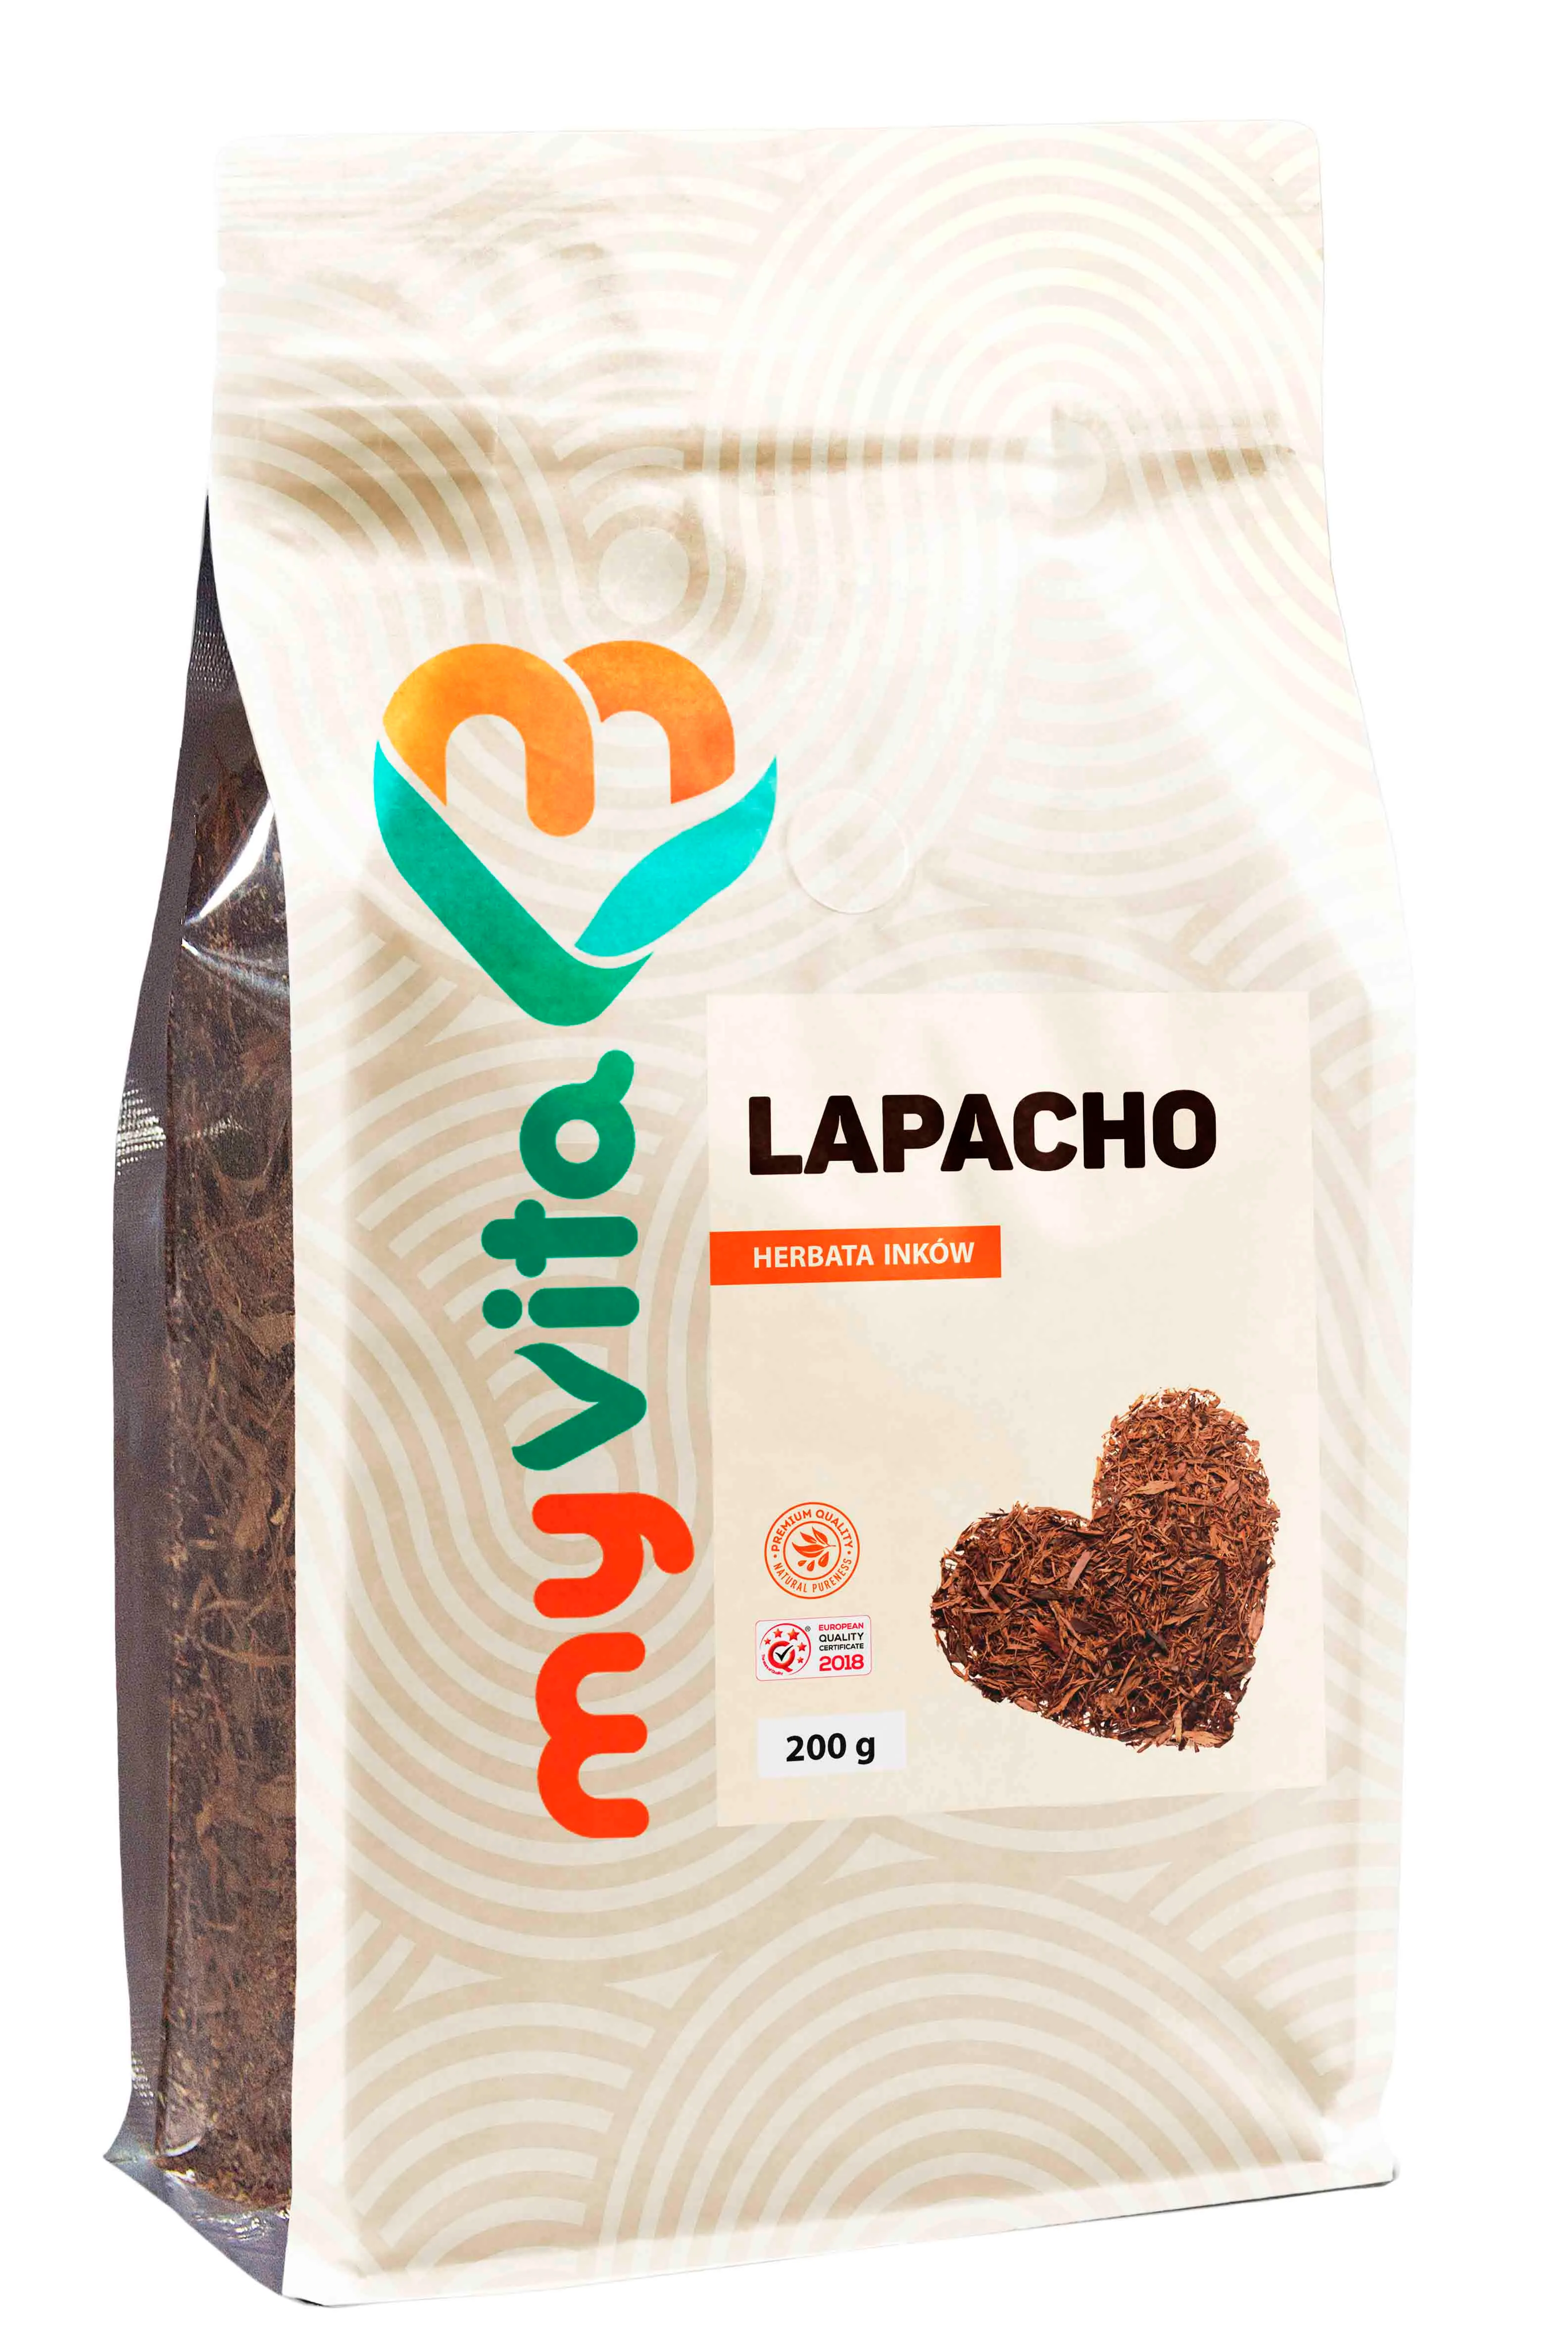 MyVita, Lapacho, herbata Inków, suplement diety, kora, 200g